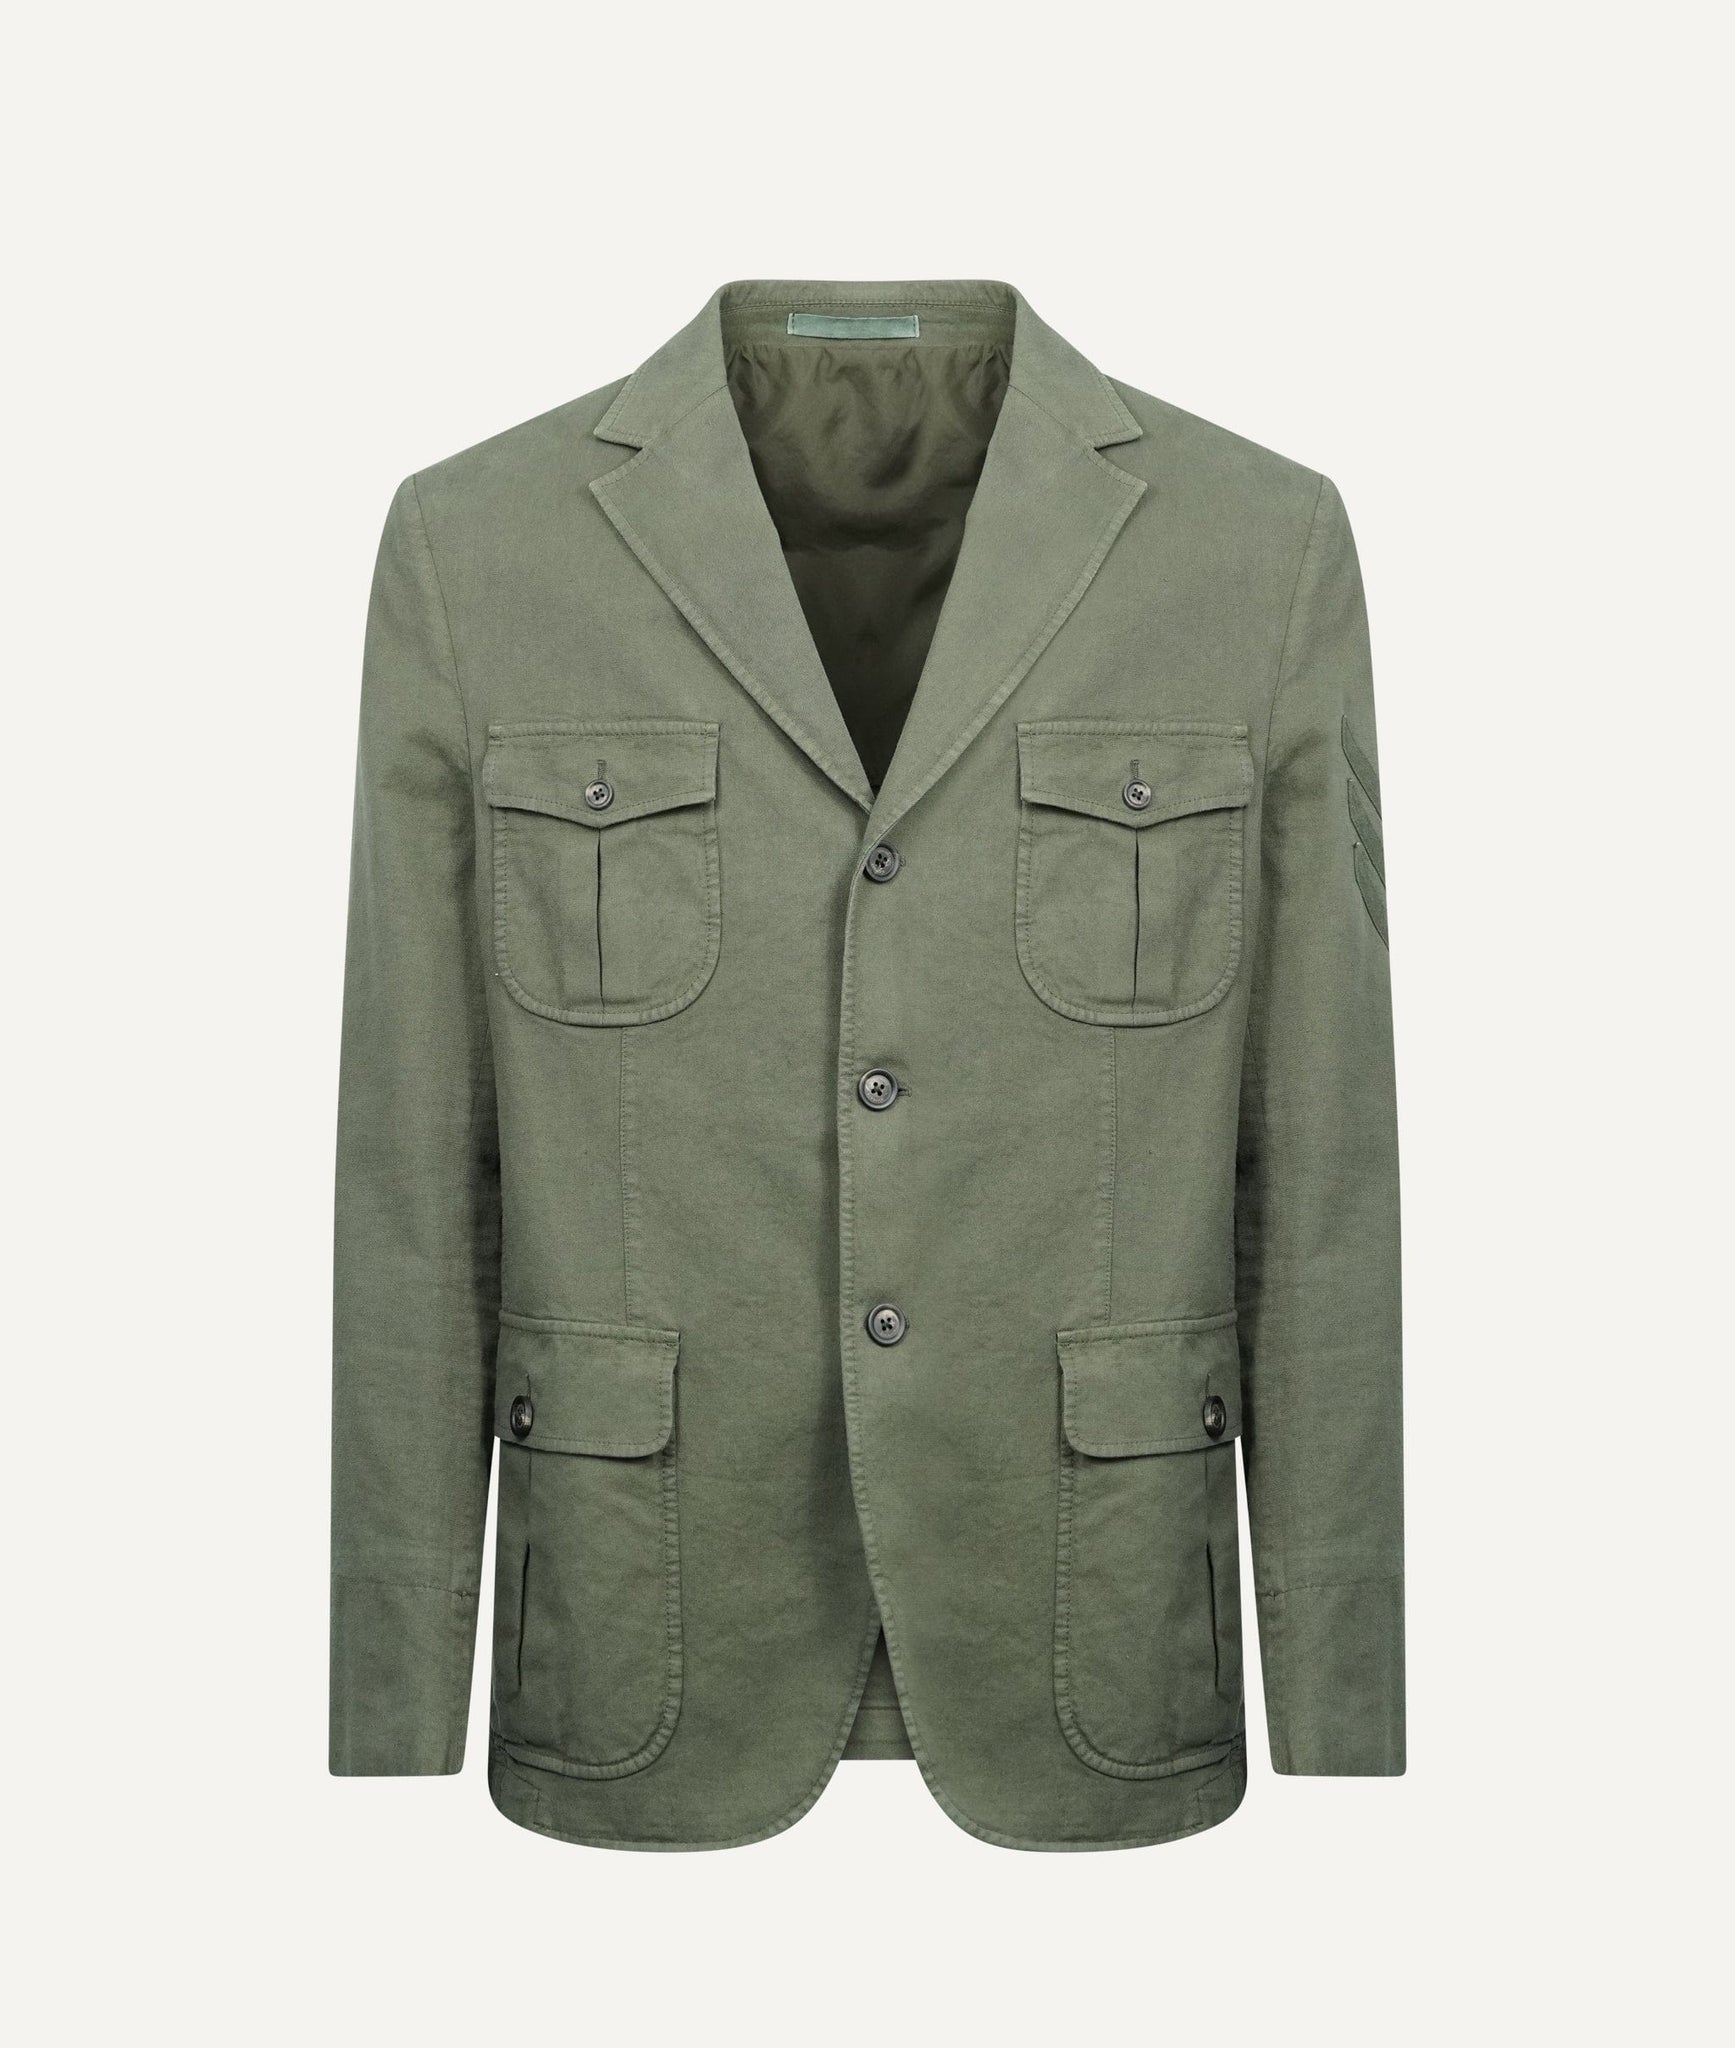 Eleventy - Jacket in Cotton & Linen